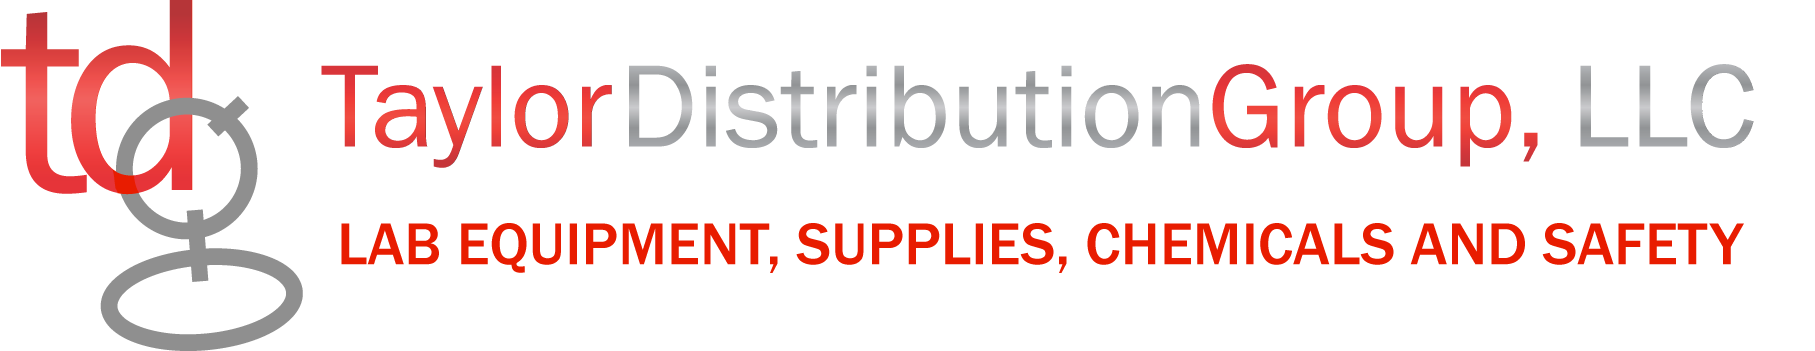 Taylor Distribution Group logo